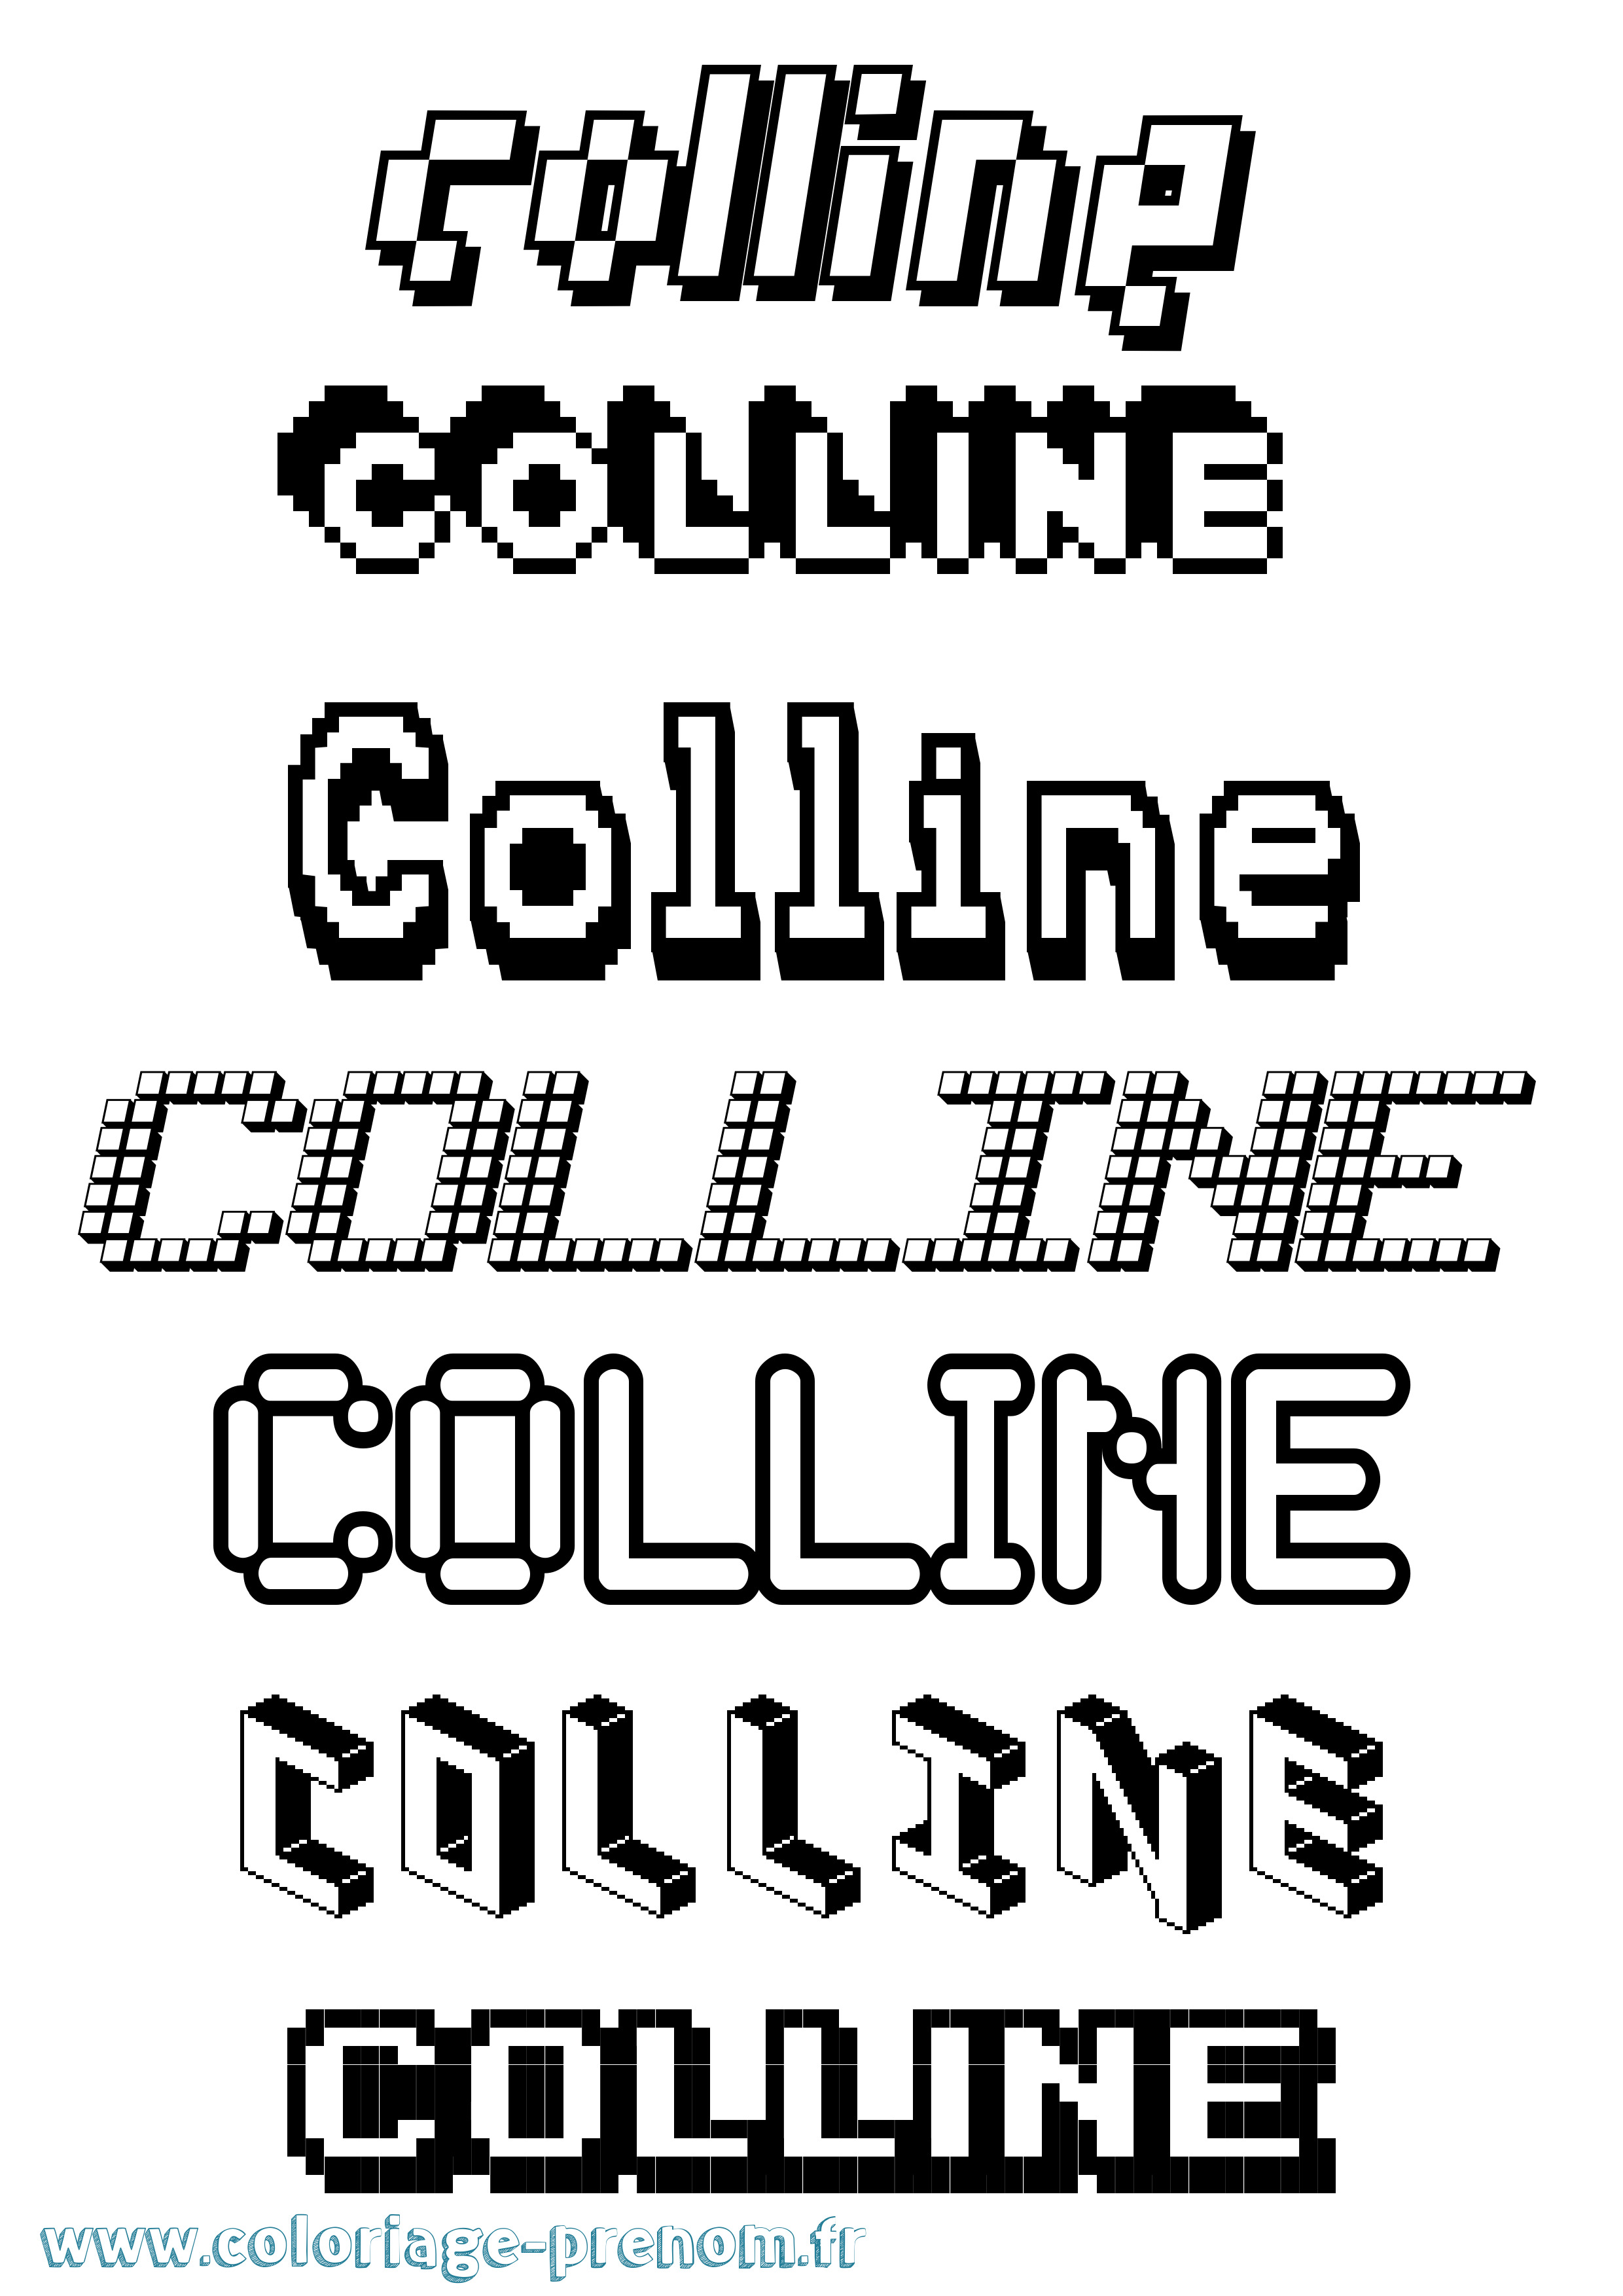 Coloriage prénom Colline Pixel